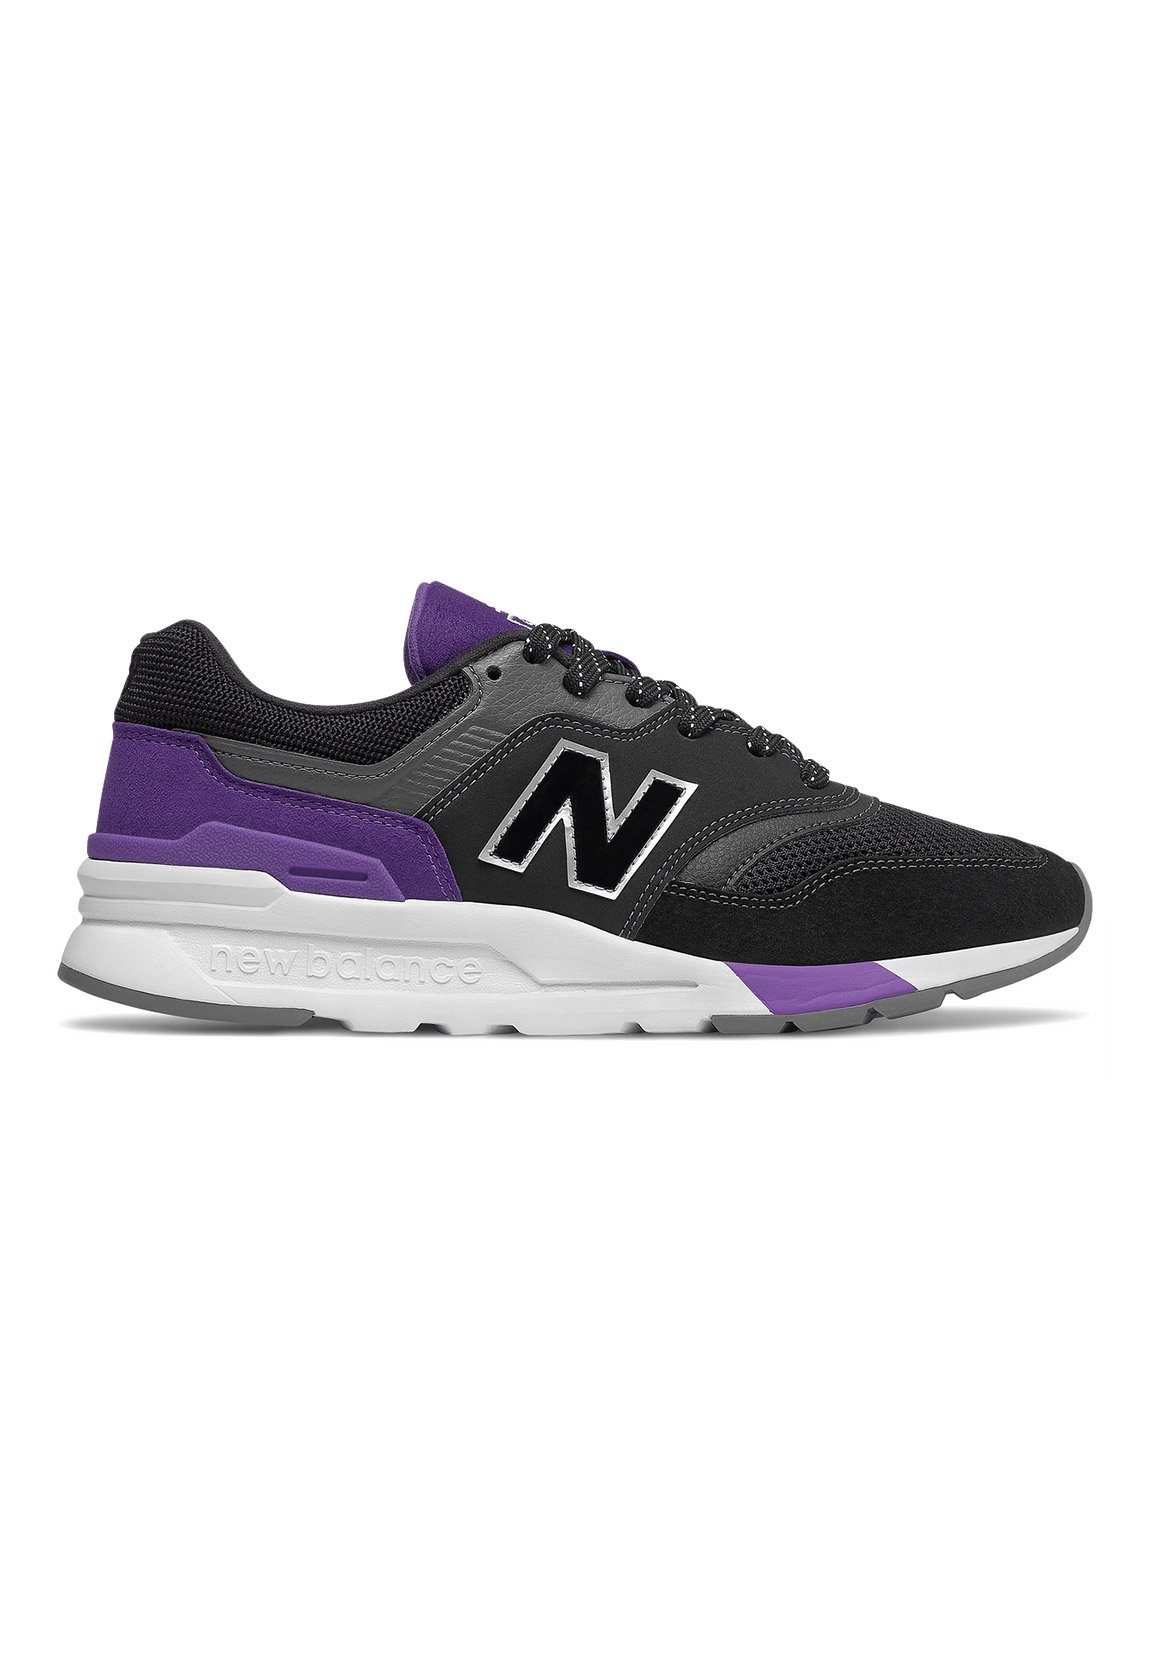 New Balance New Balance Sneaker Damen CW997HYB Schwarz/Lila Black/Purple  Sneaker